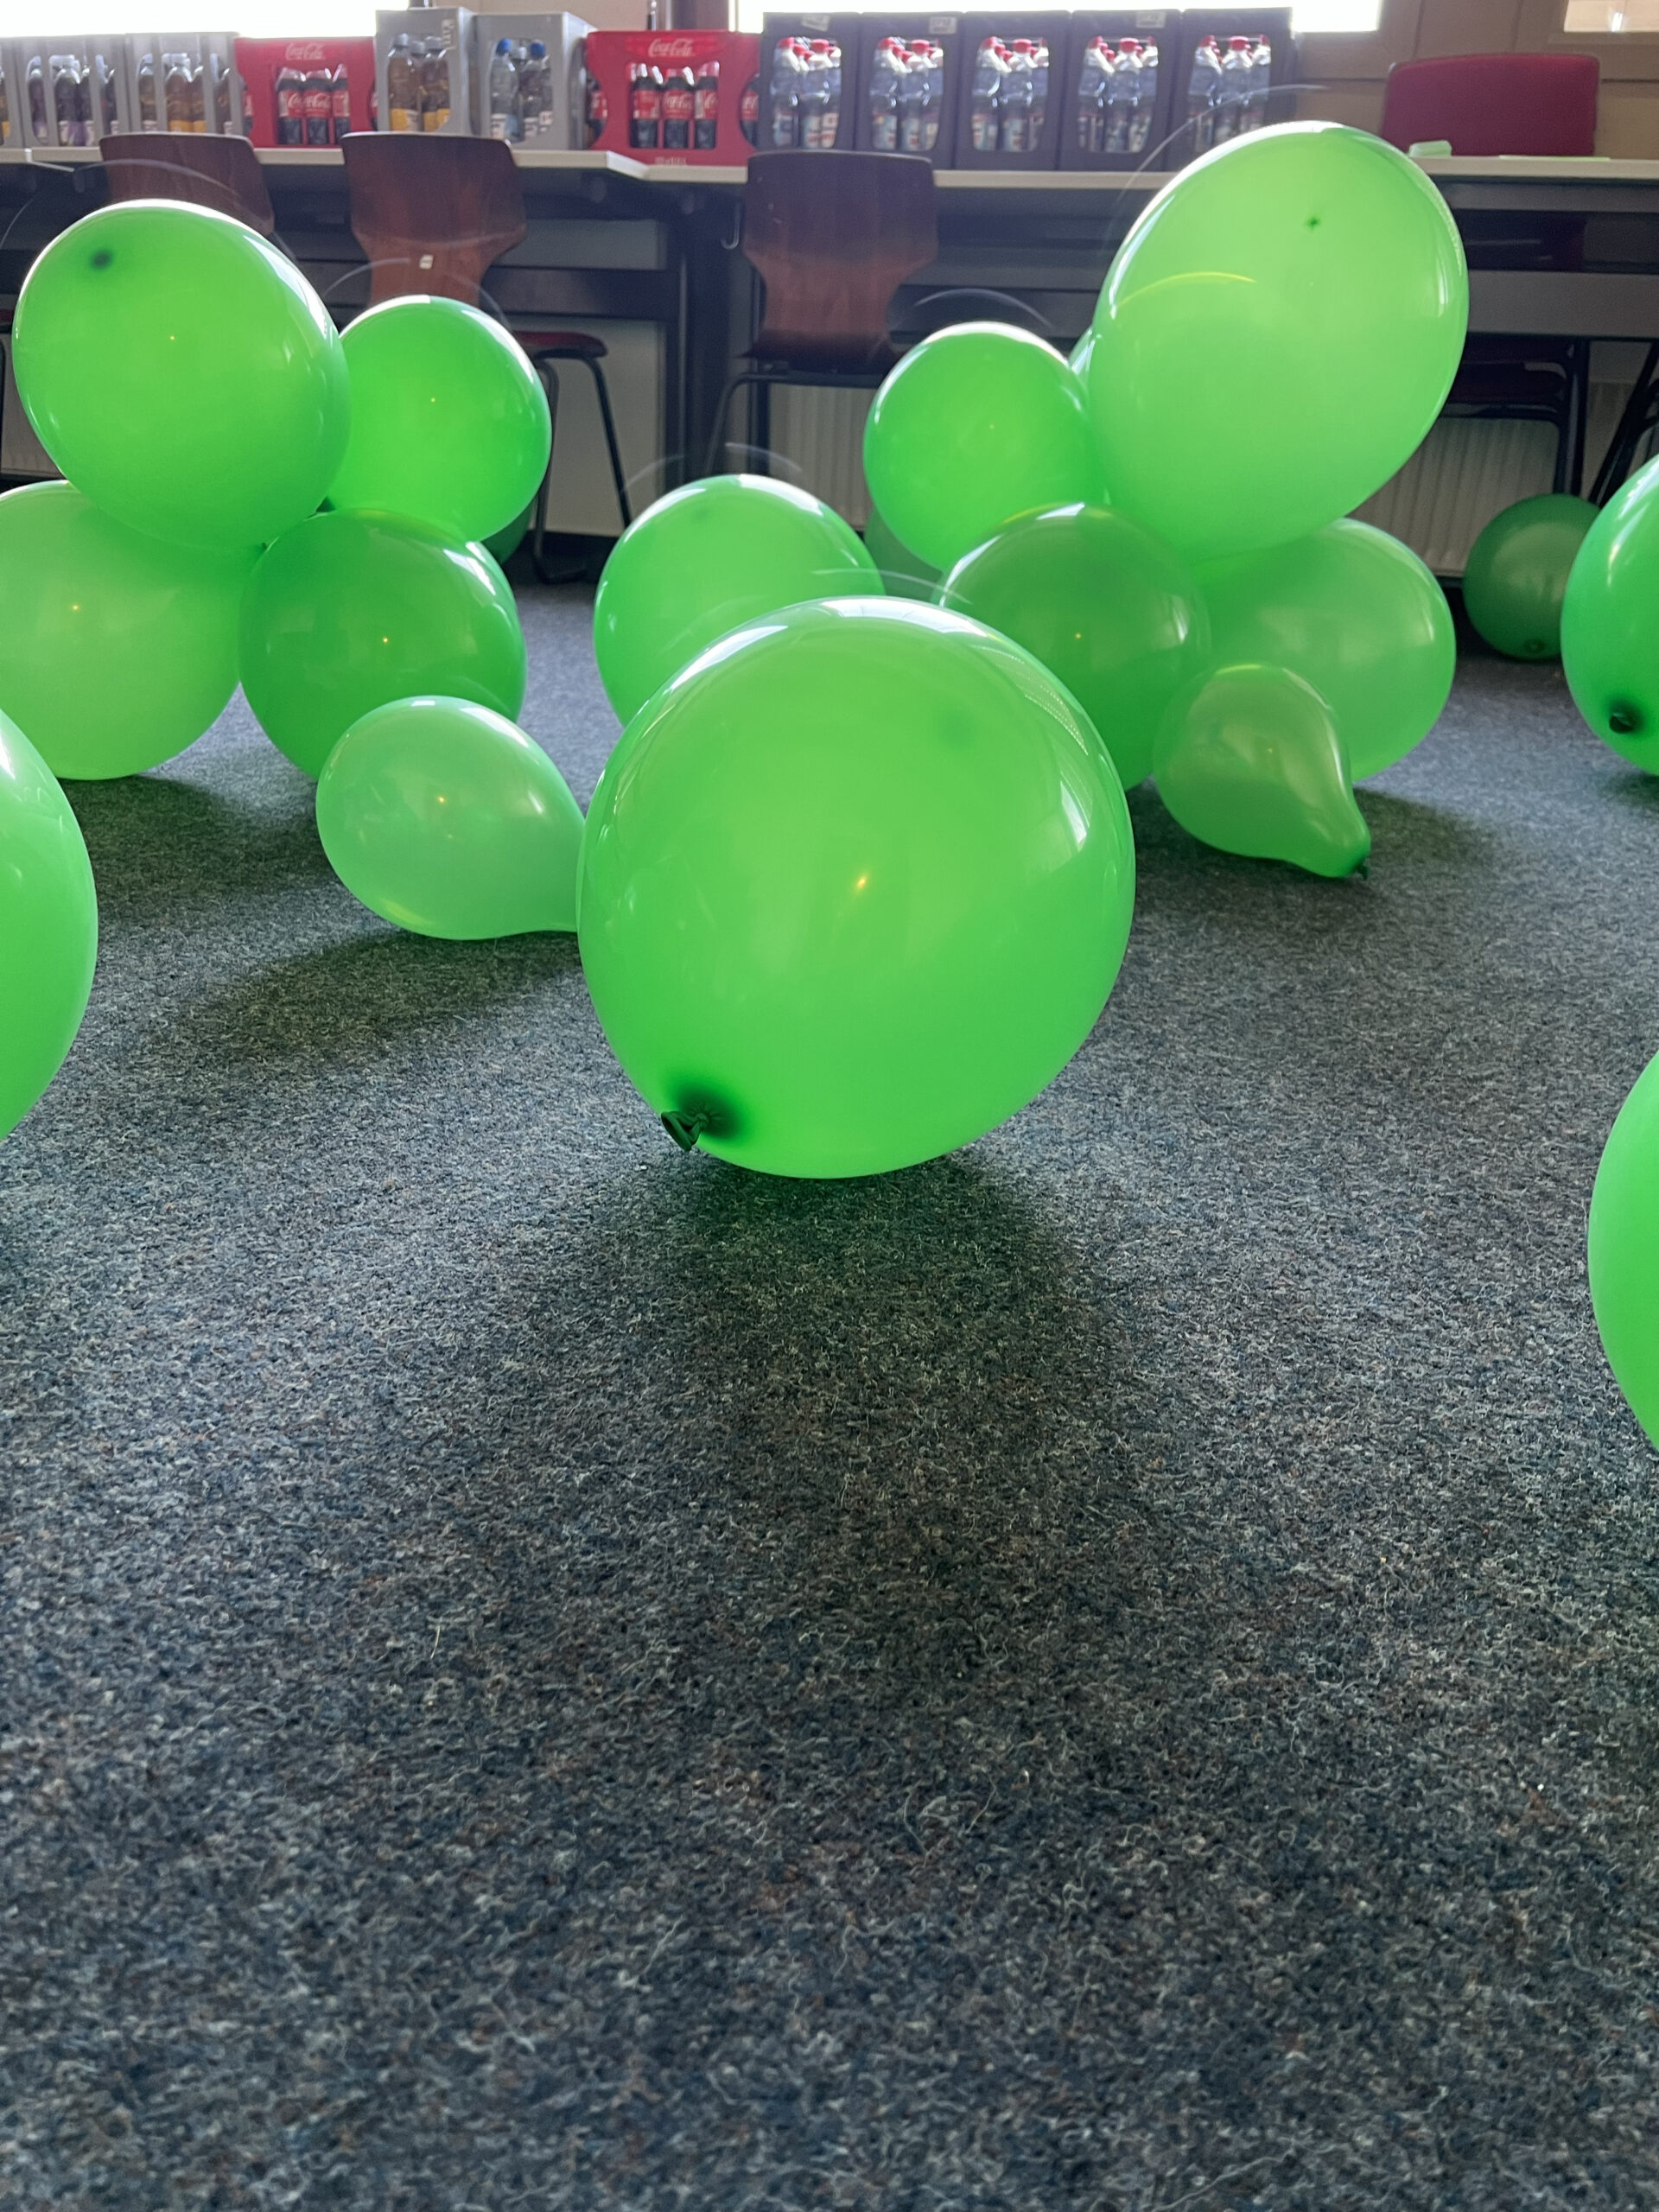 Creative Camp dccss23 Deko, grüne Luftballons